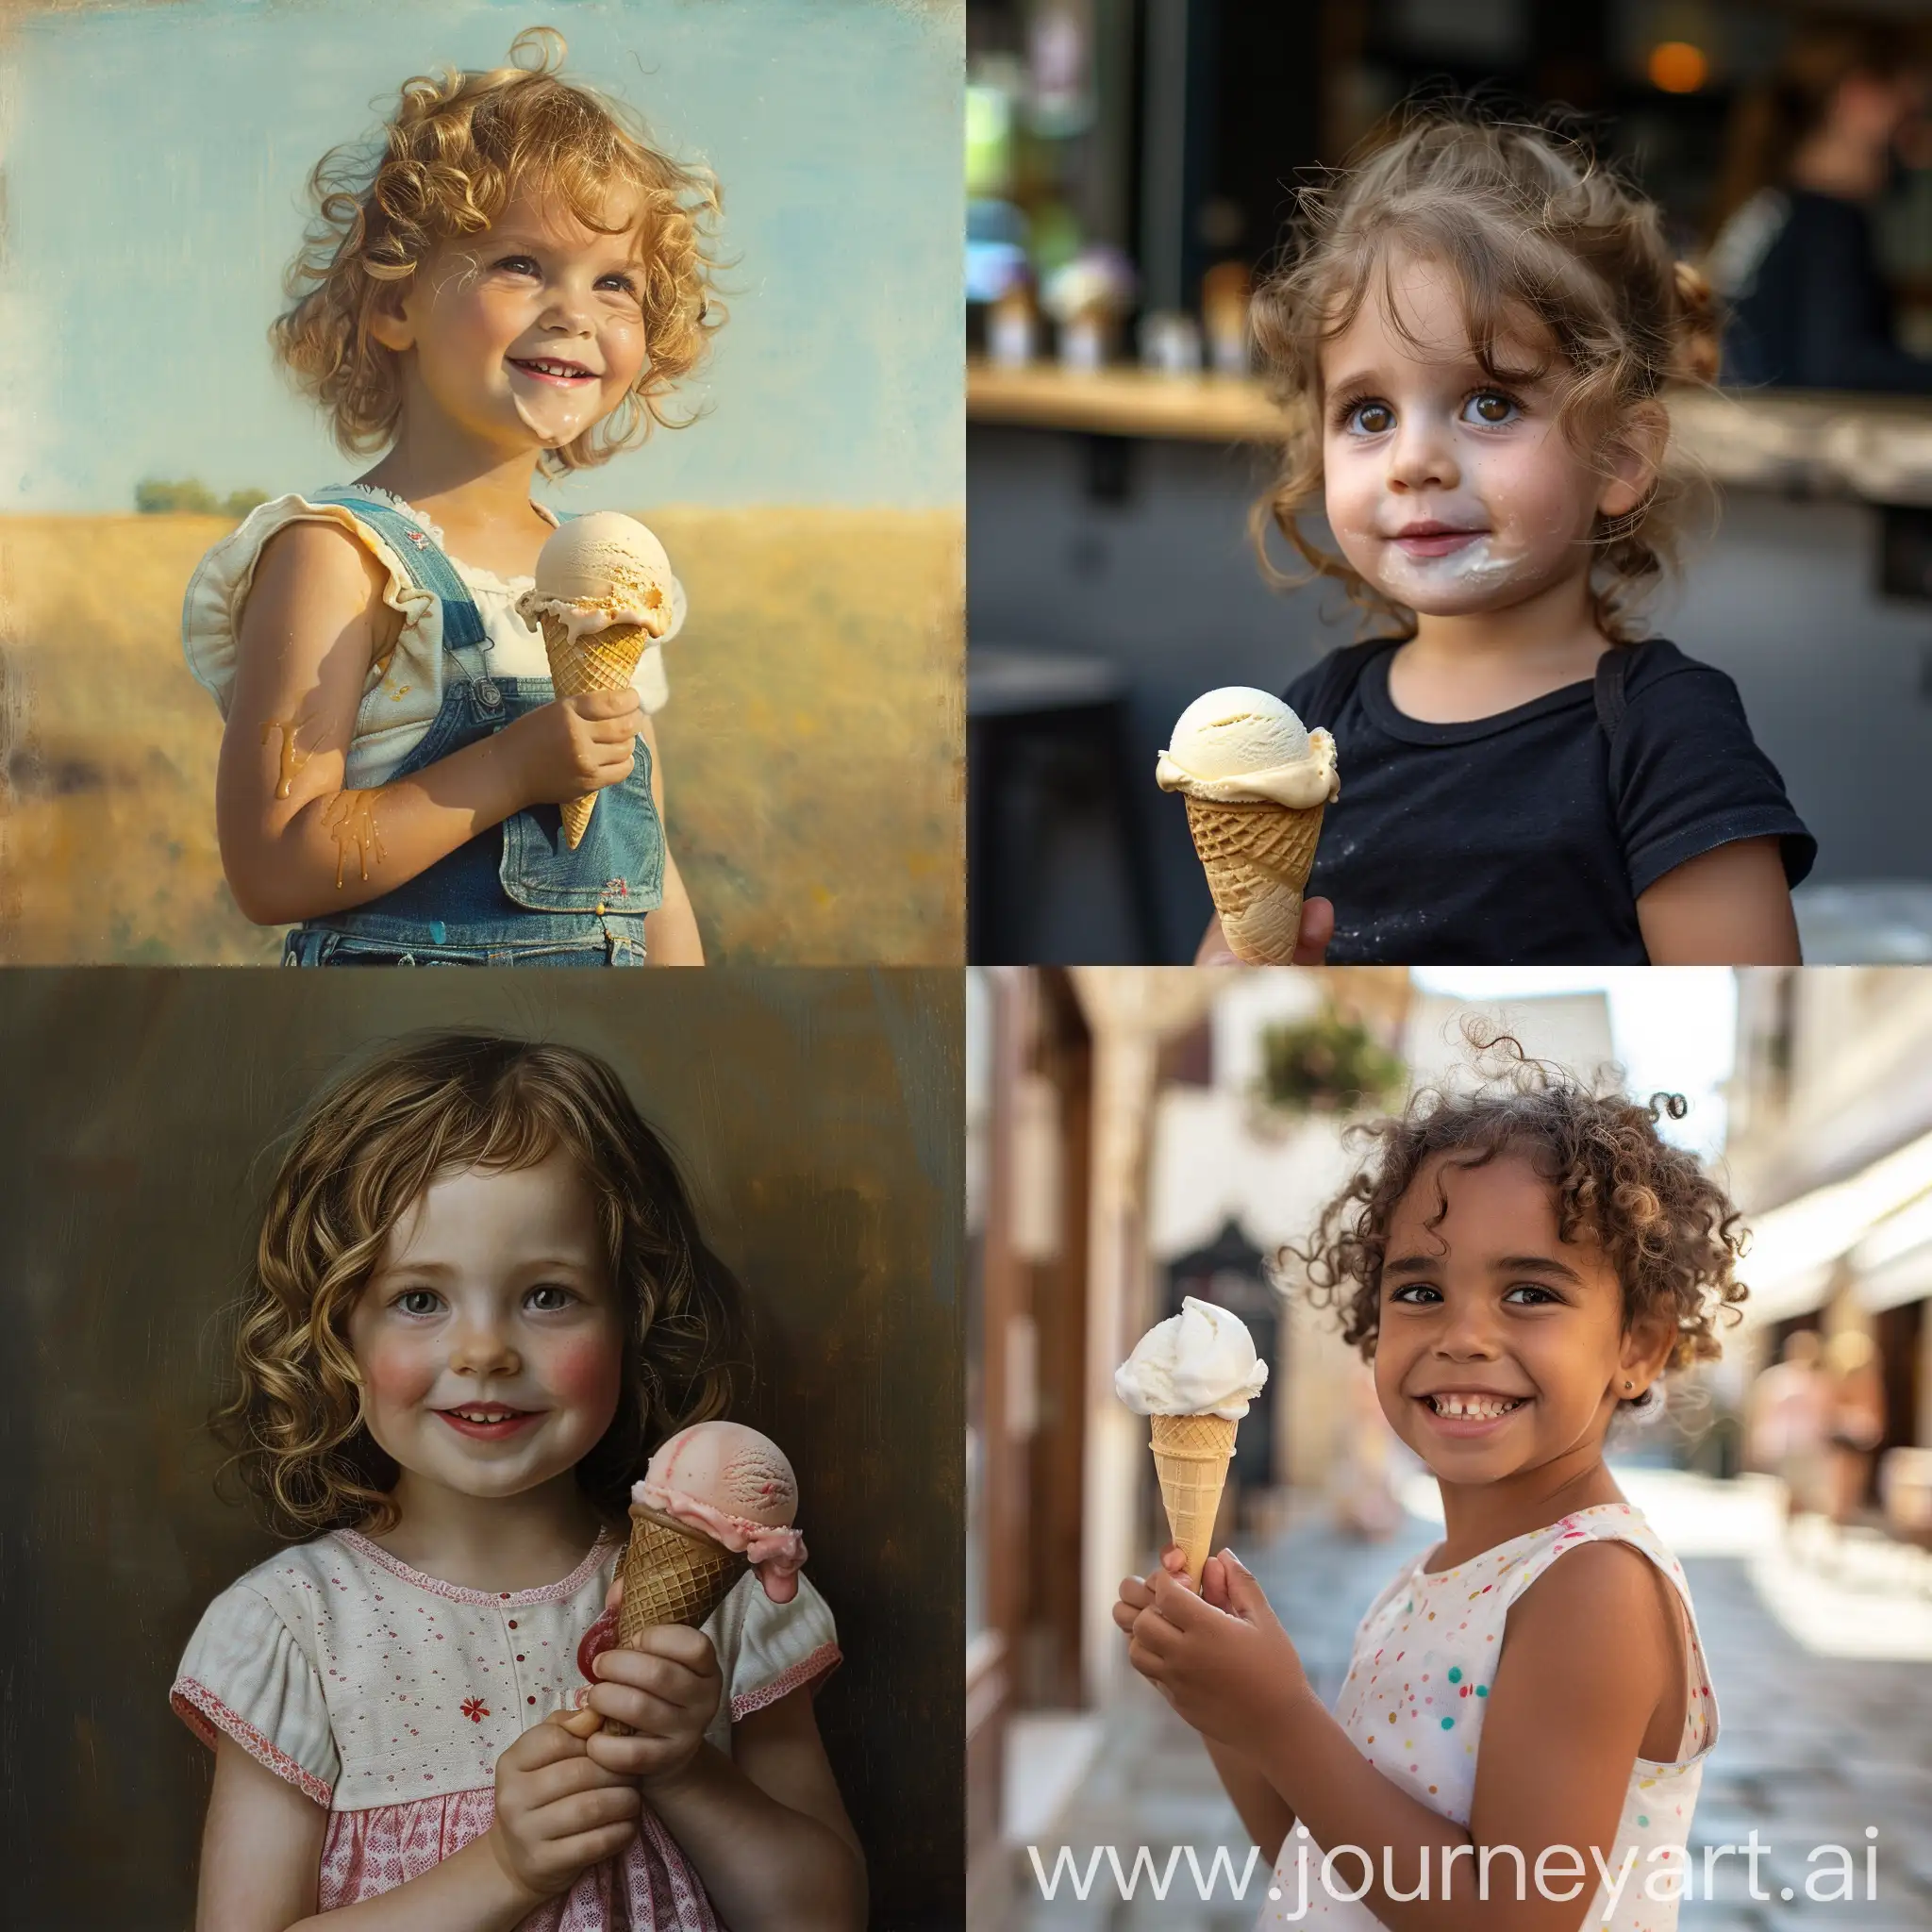 Child-Holding-Ice-Cream-Joyful-Moment-with-Sweet-Treat